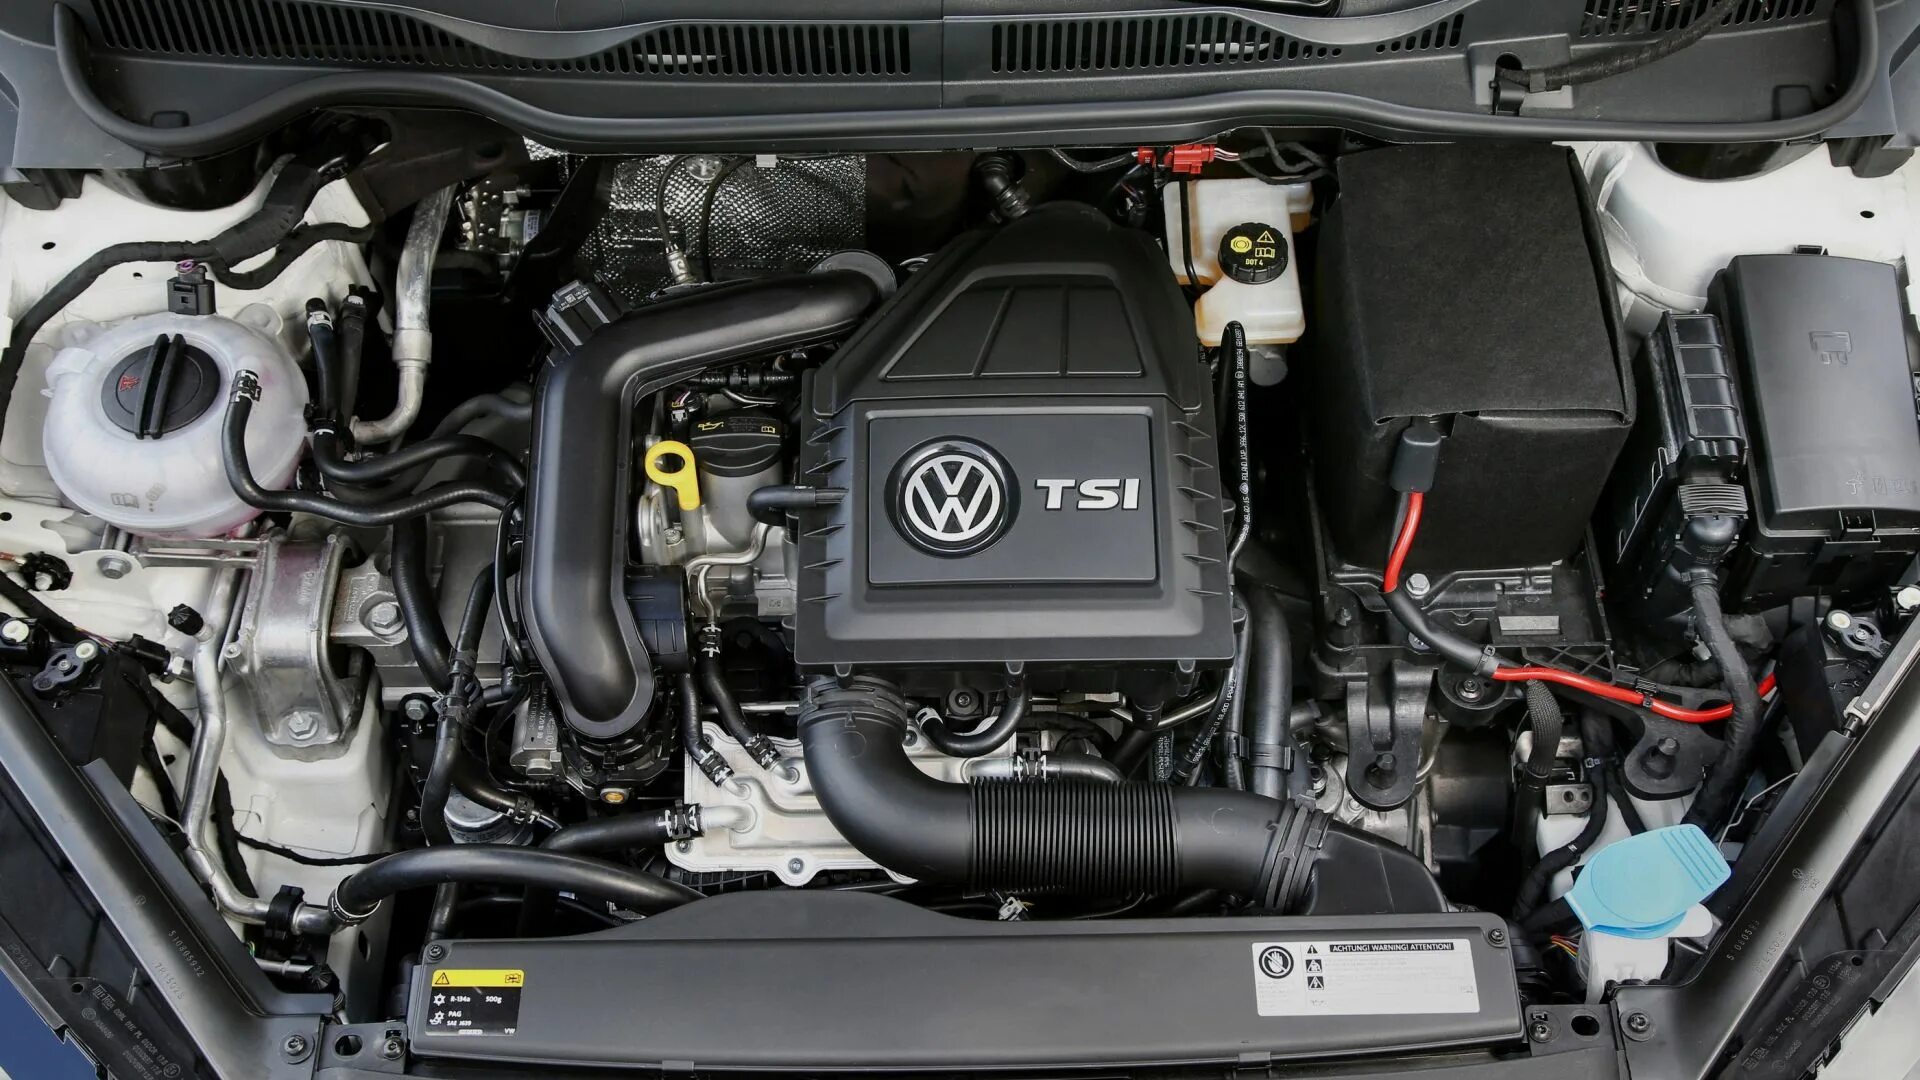 Volkswagen Golf 6 1.2 TSI. Volkswagen Golf TSI 1.2. Гольф плюс 1.2 TSI мотор. Гольф 6 мотор 1.2 TSI. Купить мотор volkswagen